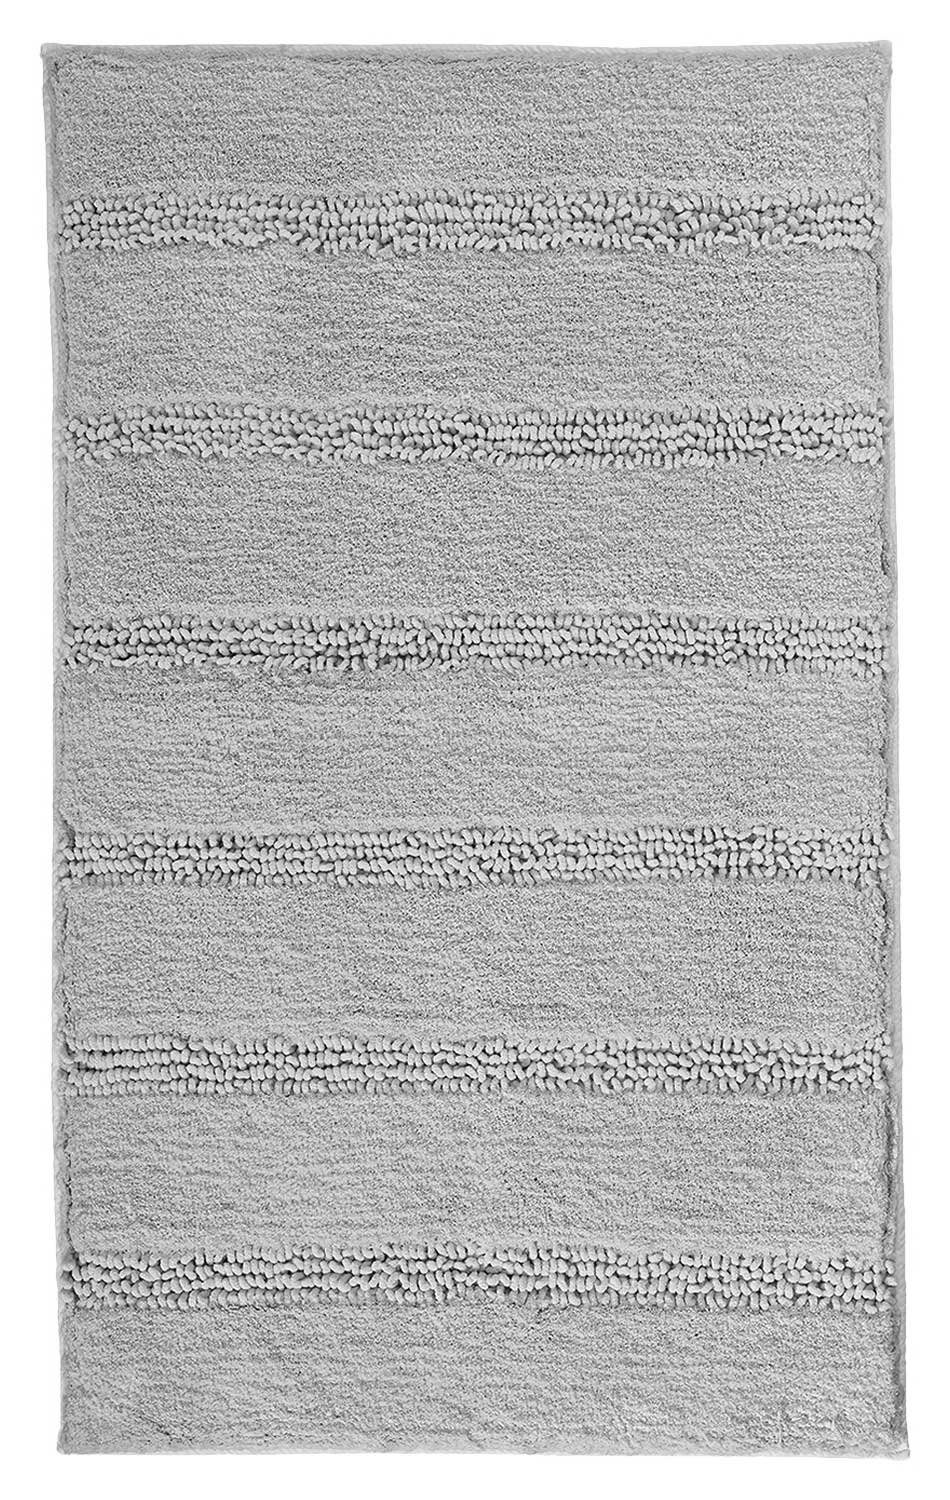 Badematte MONROVIA, 70 x 120 cm, Platinfarben, Gestreift, Höhe 23 mm, rutschhemmend beschichtet, fußbodenheizungsgeeignet, Polyester, rechteckig